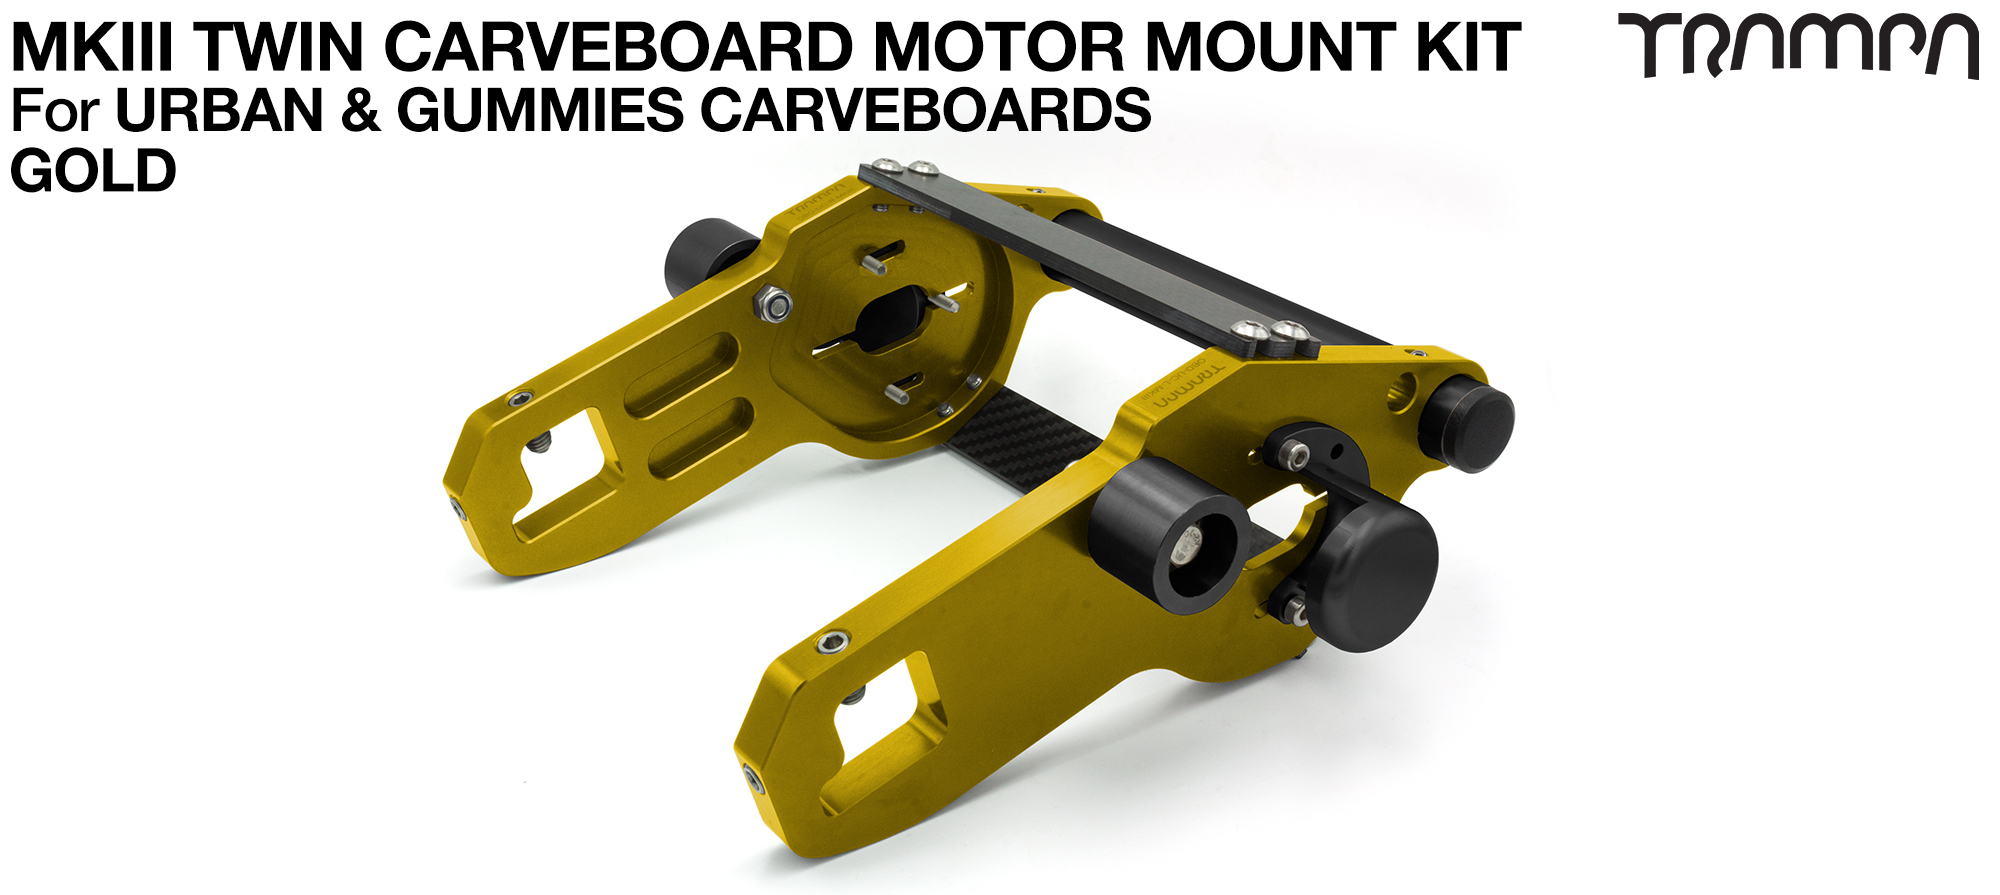 MkIII CARVE BOARD Motor Mount Kit - TWIN GOLD